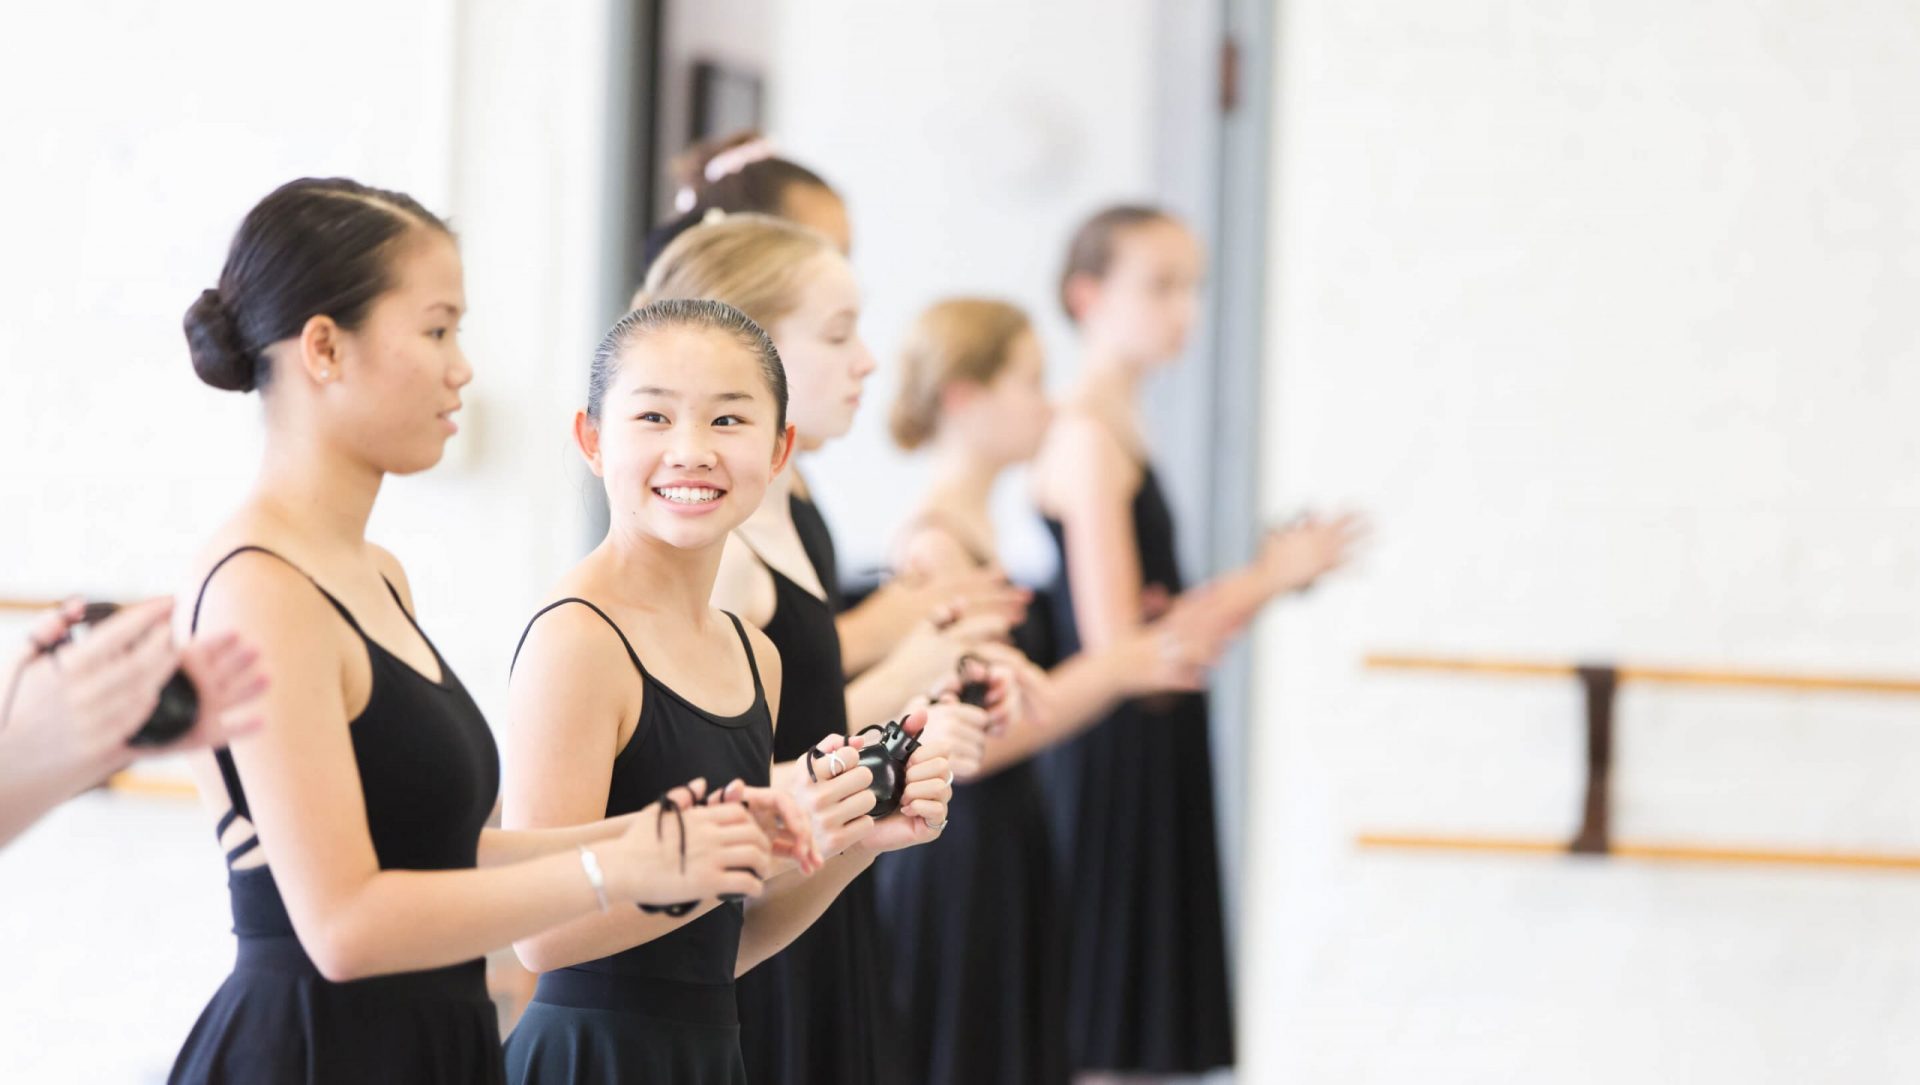 BalletMet summer intensive students